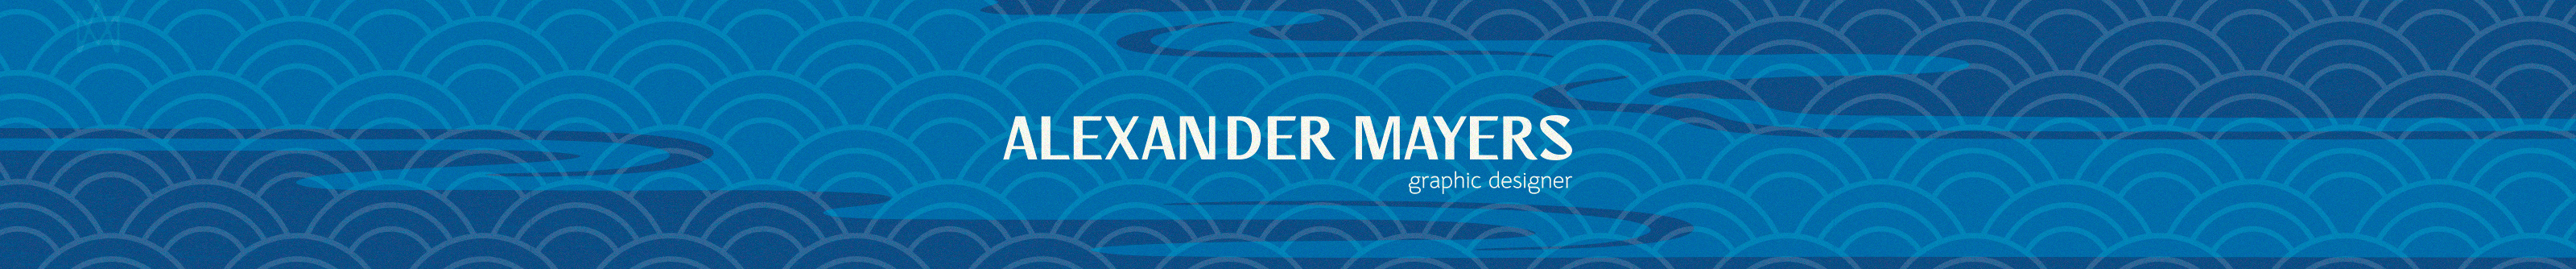 Alexander Mayers's profile banner